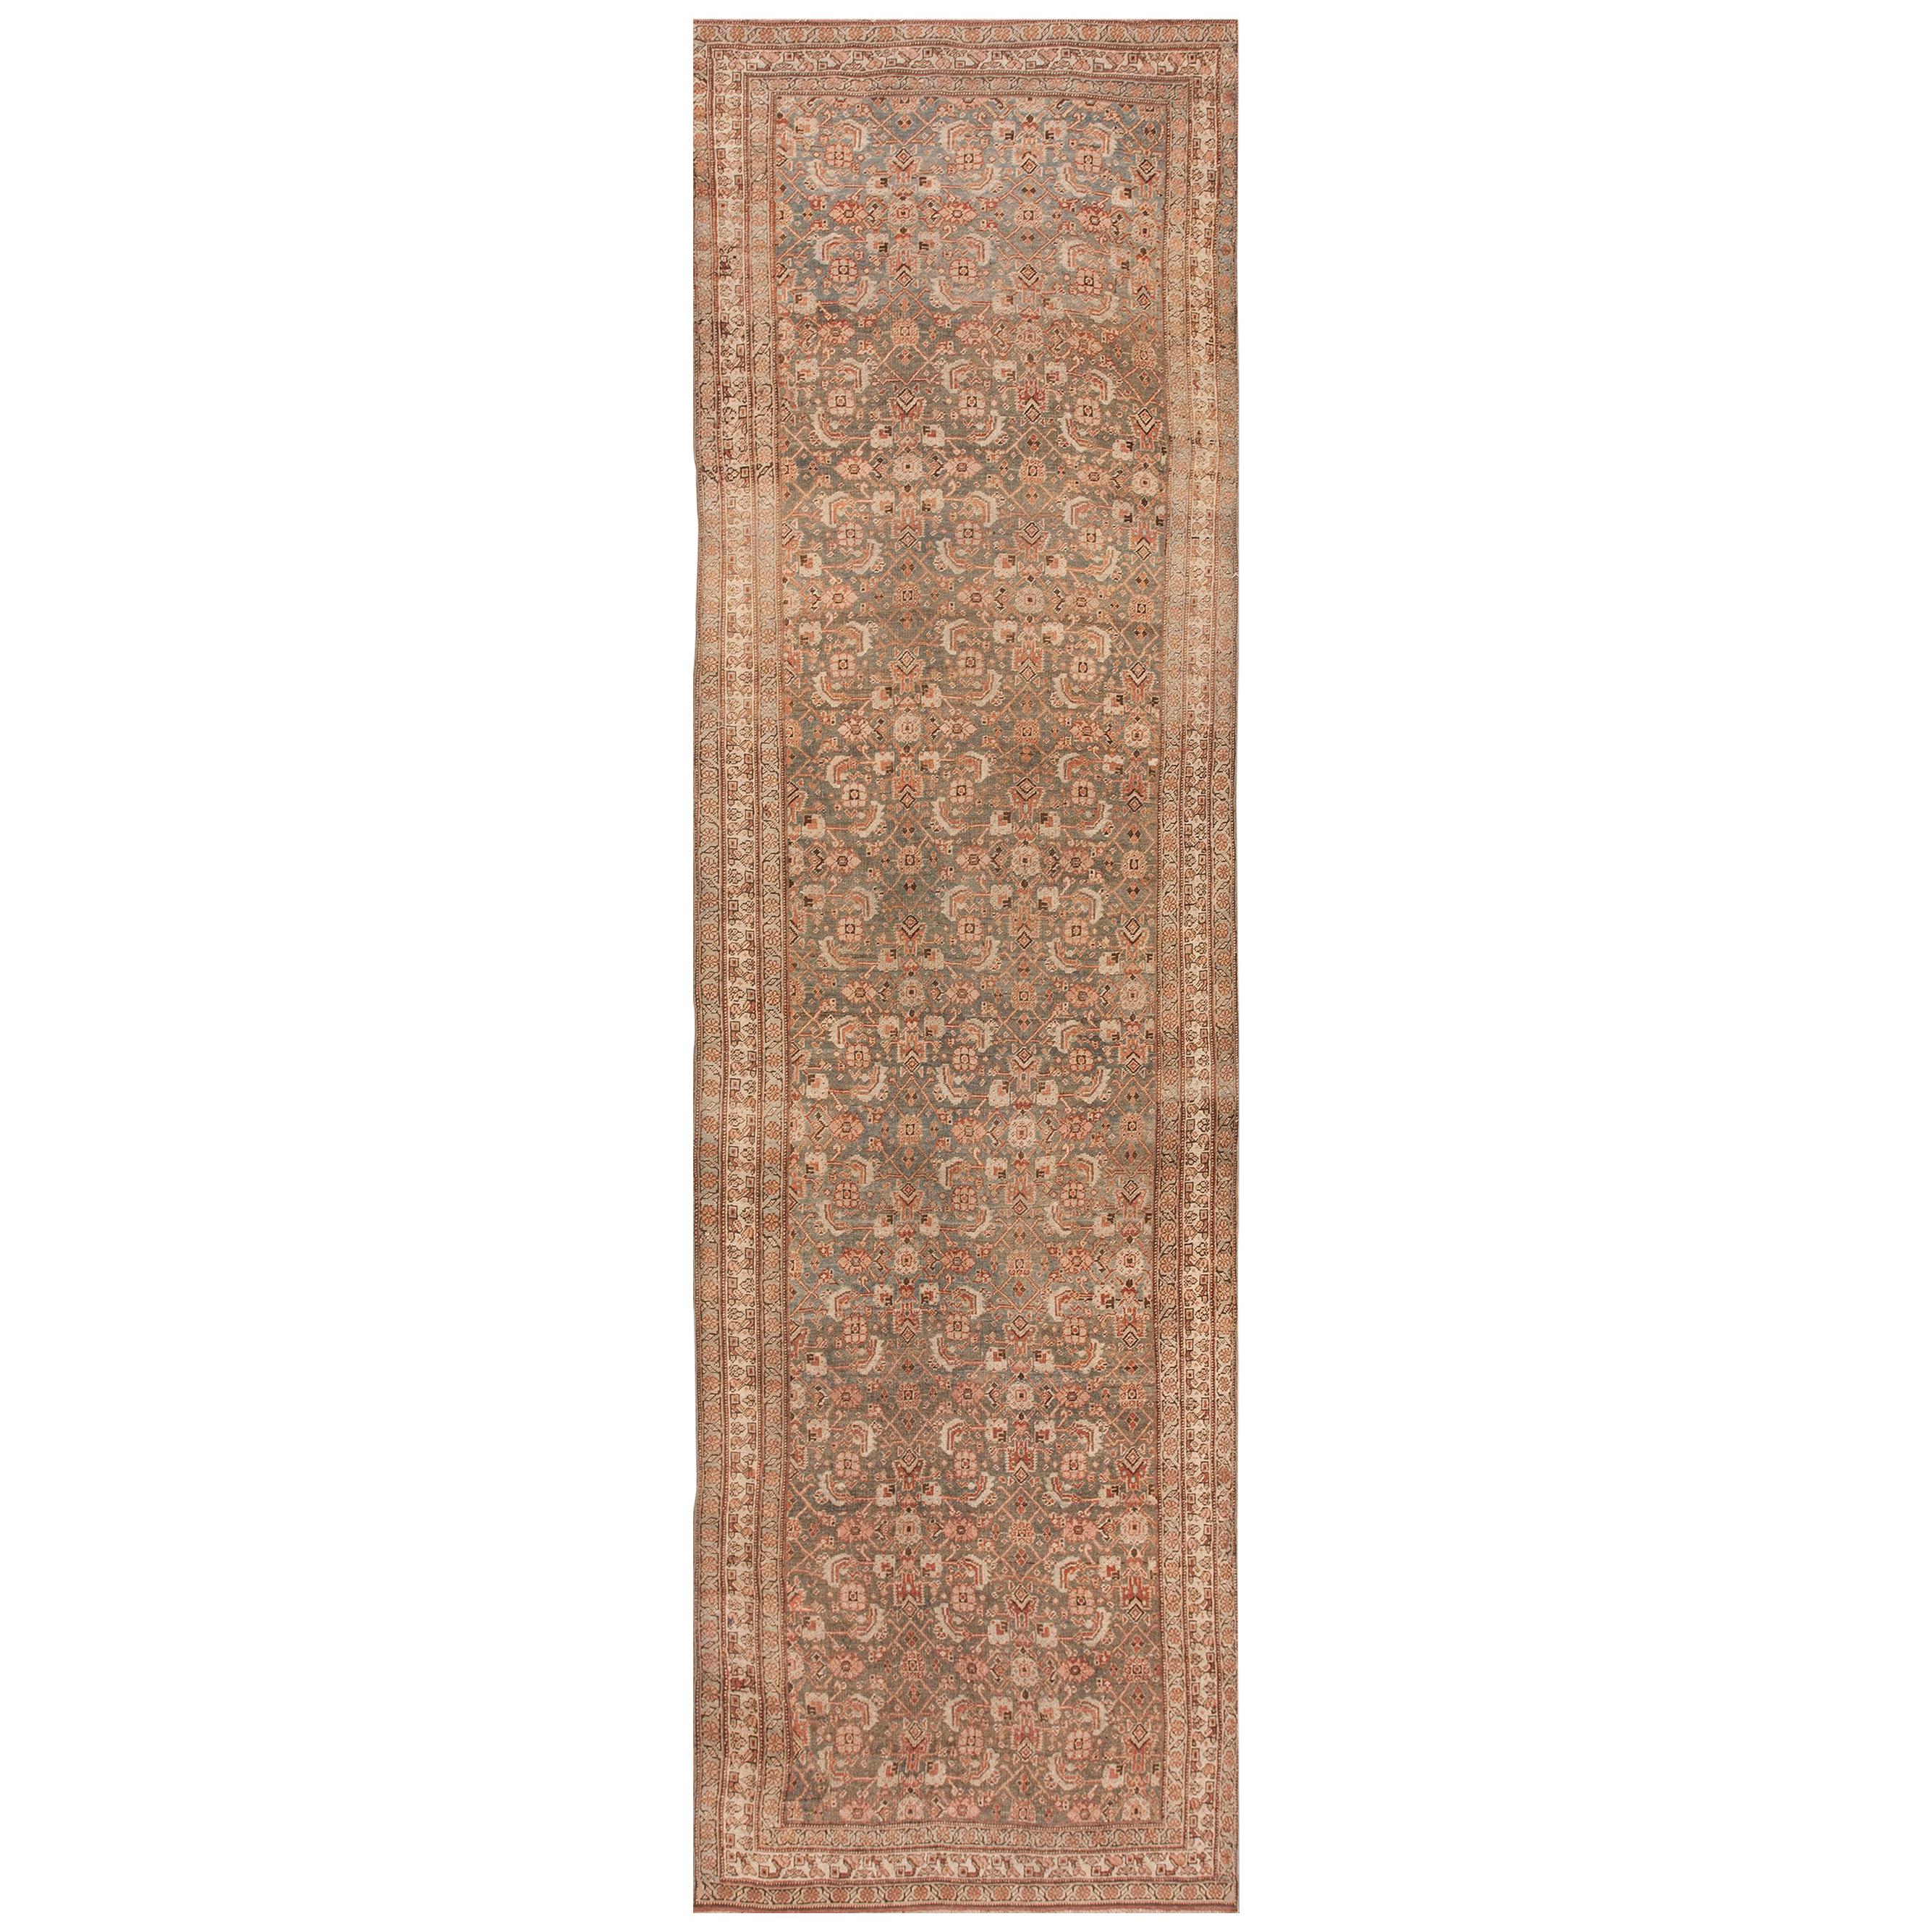 Early 20th Century Persian Bijar Carpet ( 4' 2" x 14' 8" - 127 x 447 cm ) For Sale